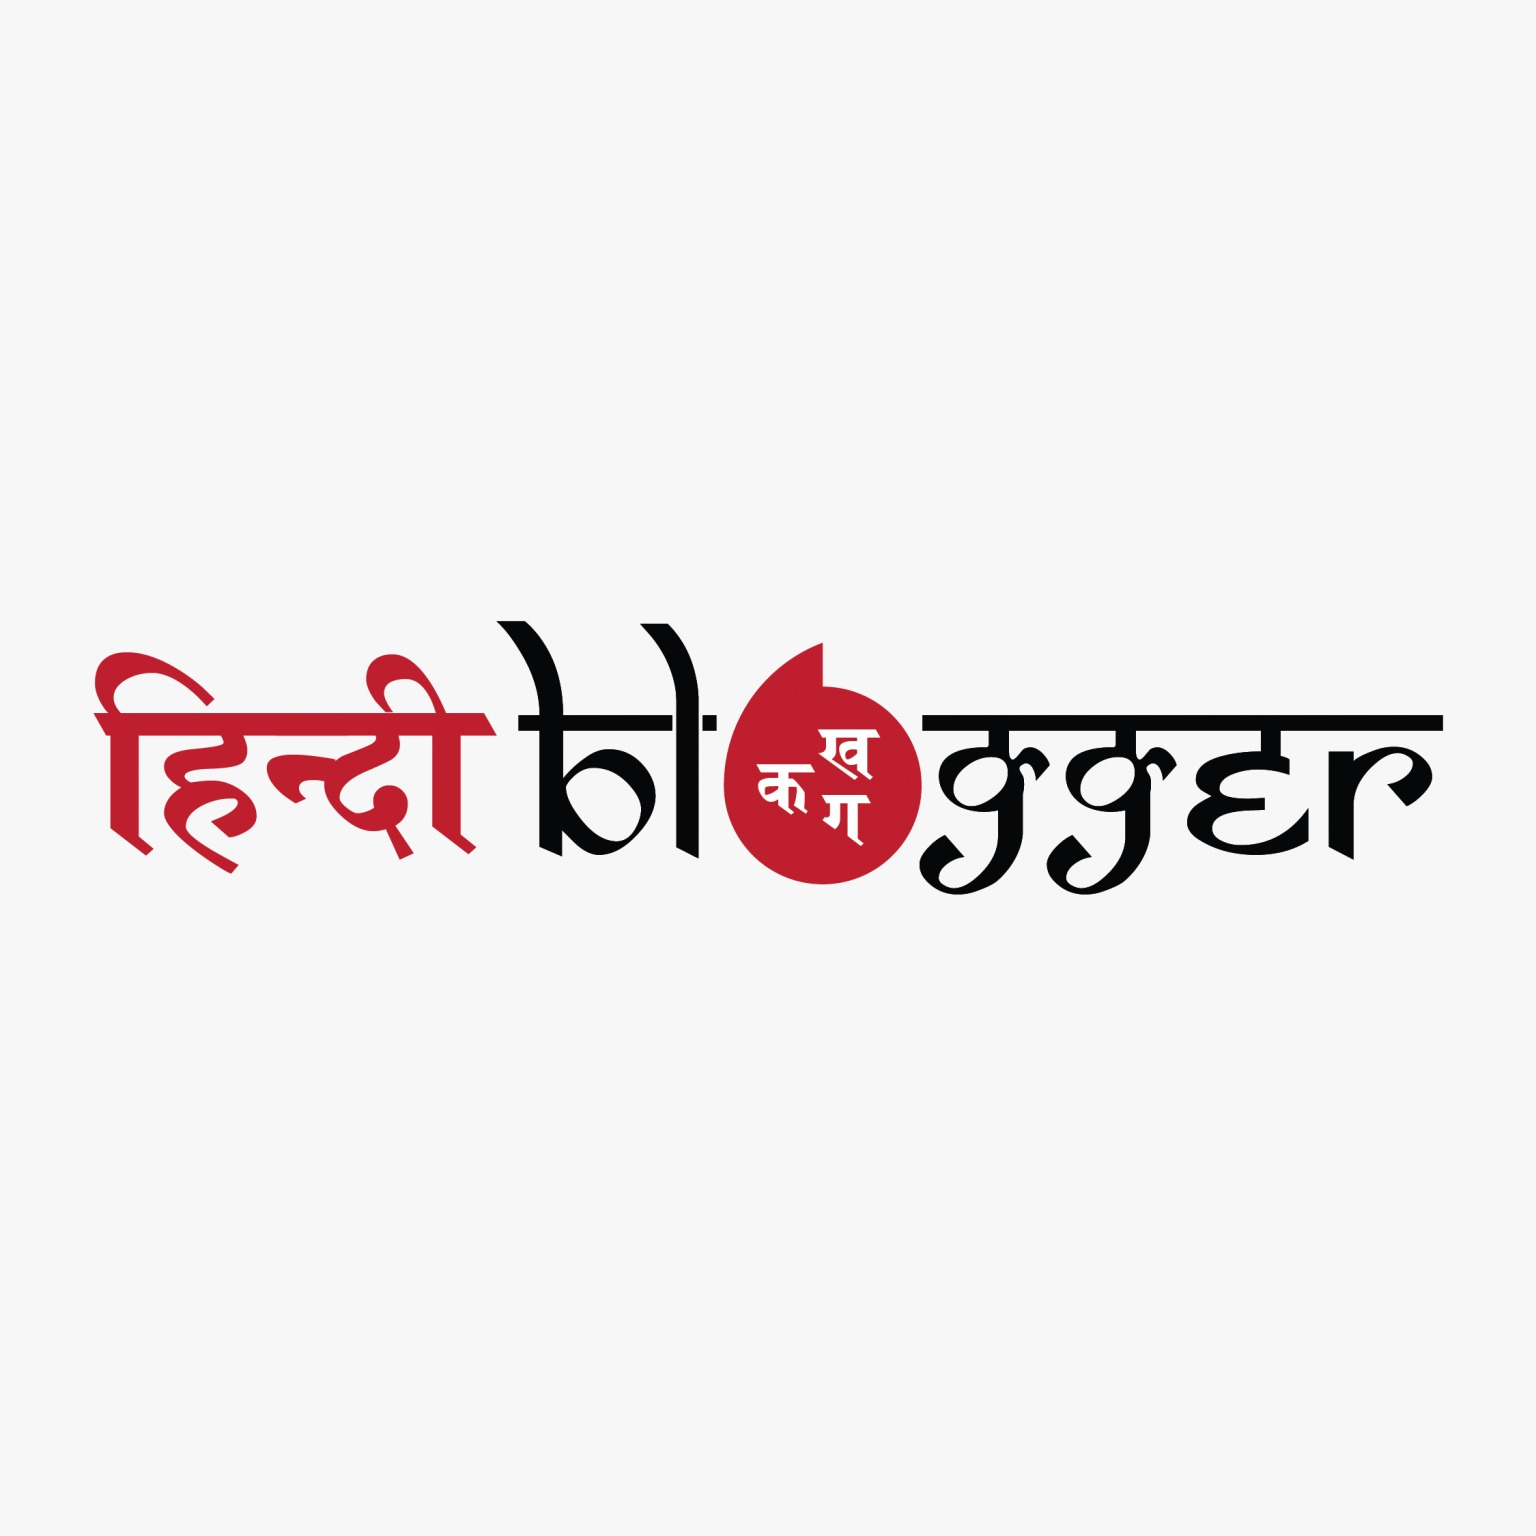 Company Logo For Hindi Blogger'